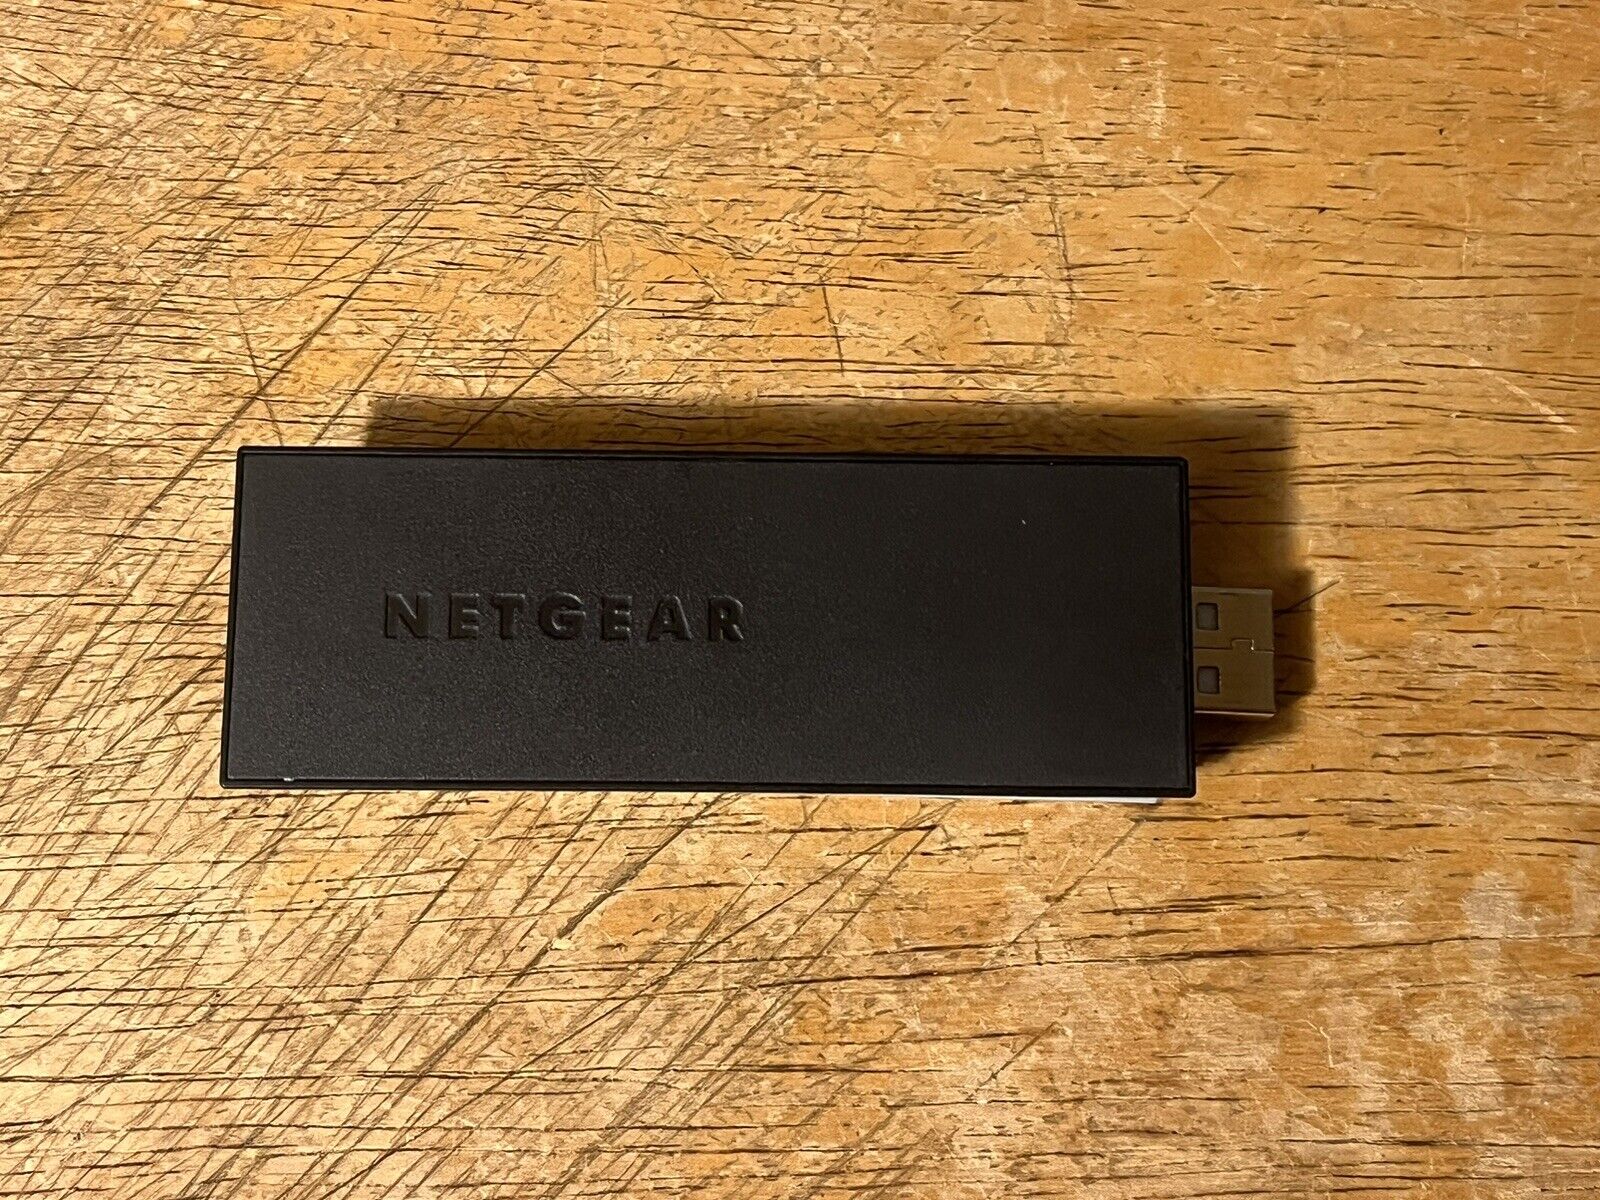 NetGear A6200 802.11ac Dual Band WiFi Adjustable Hinge USB Adapter 